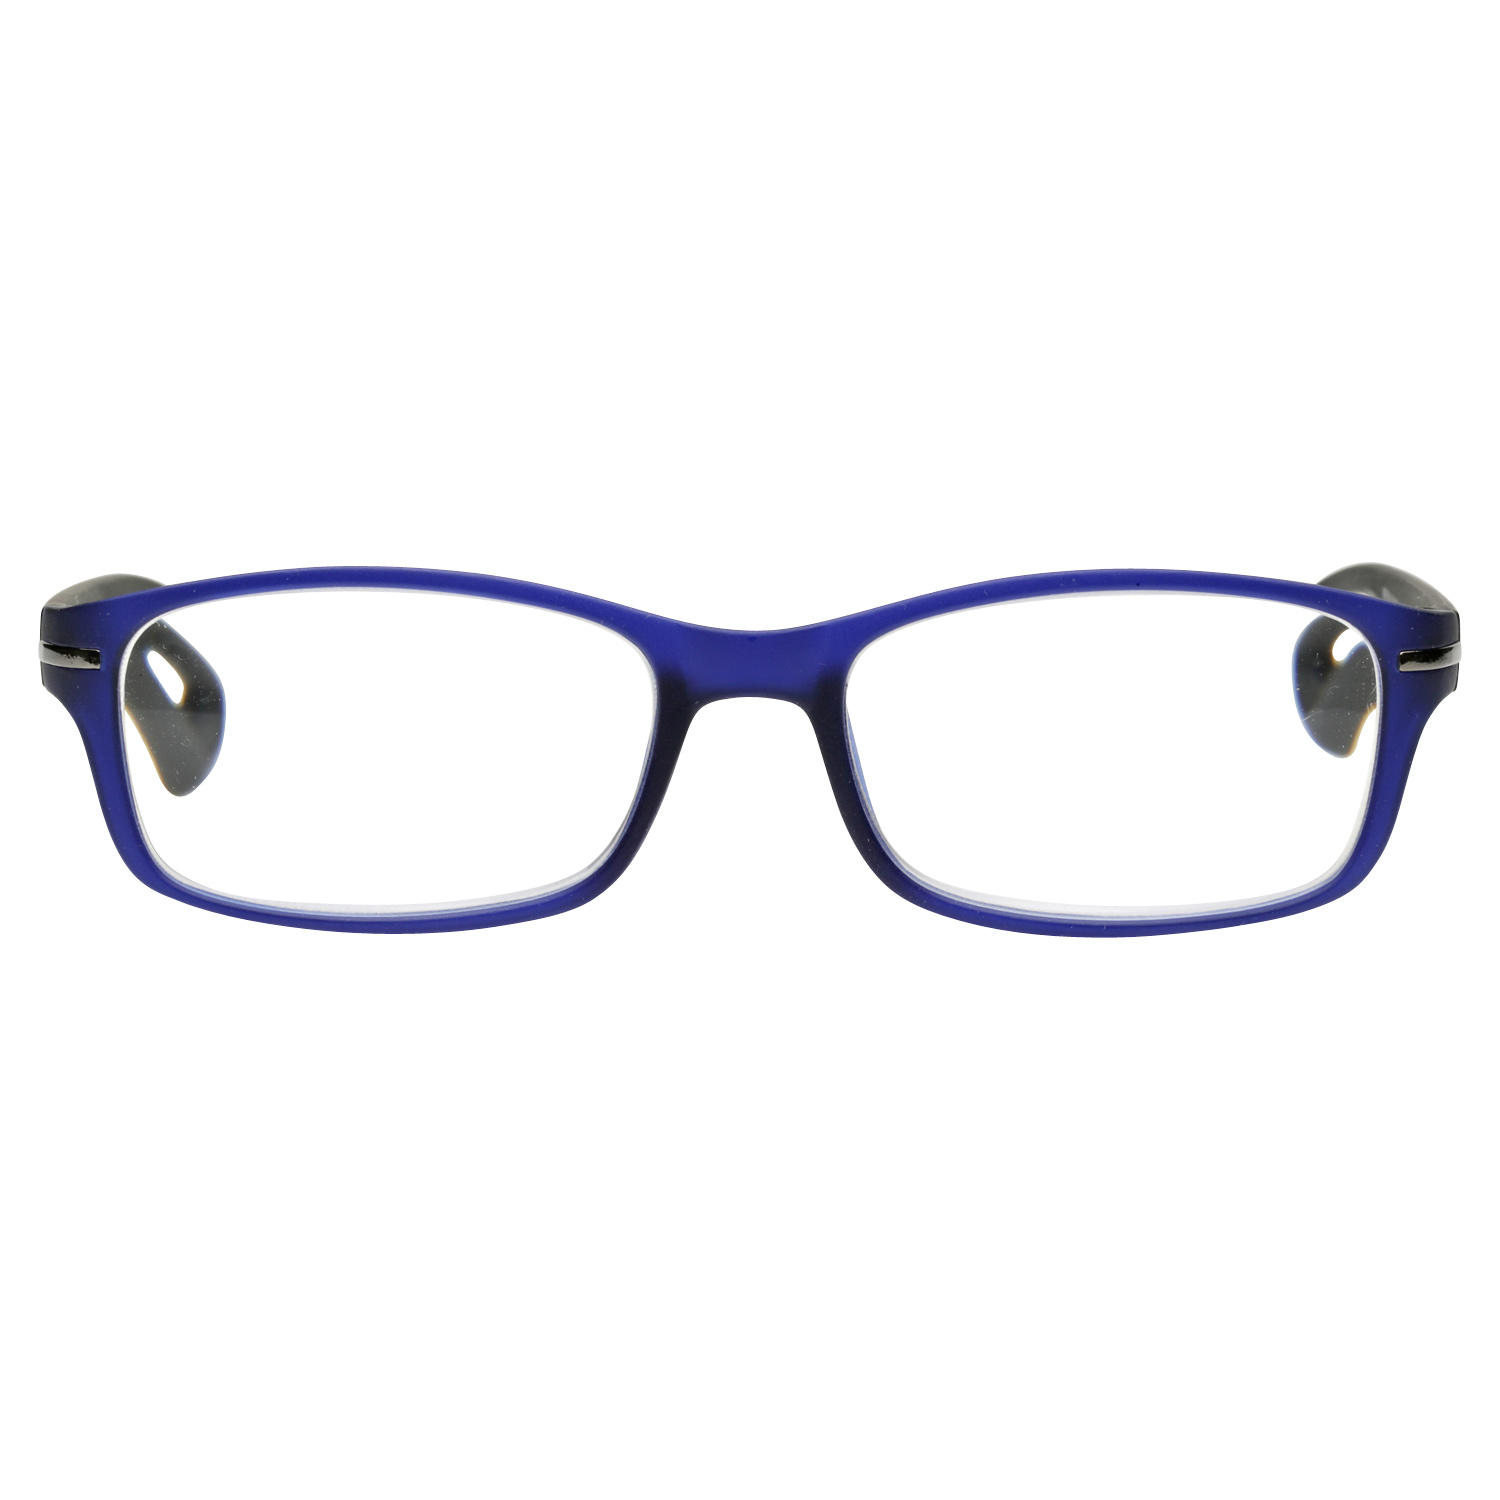 Blue Reading Glasses UK | Just-Glasses.co.uk | Ready Made Readers